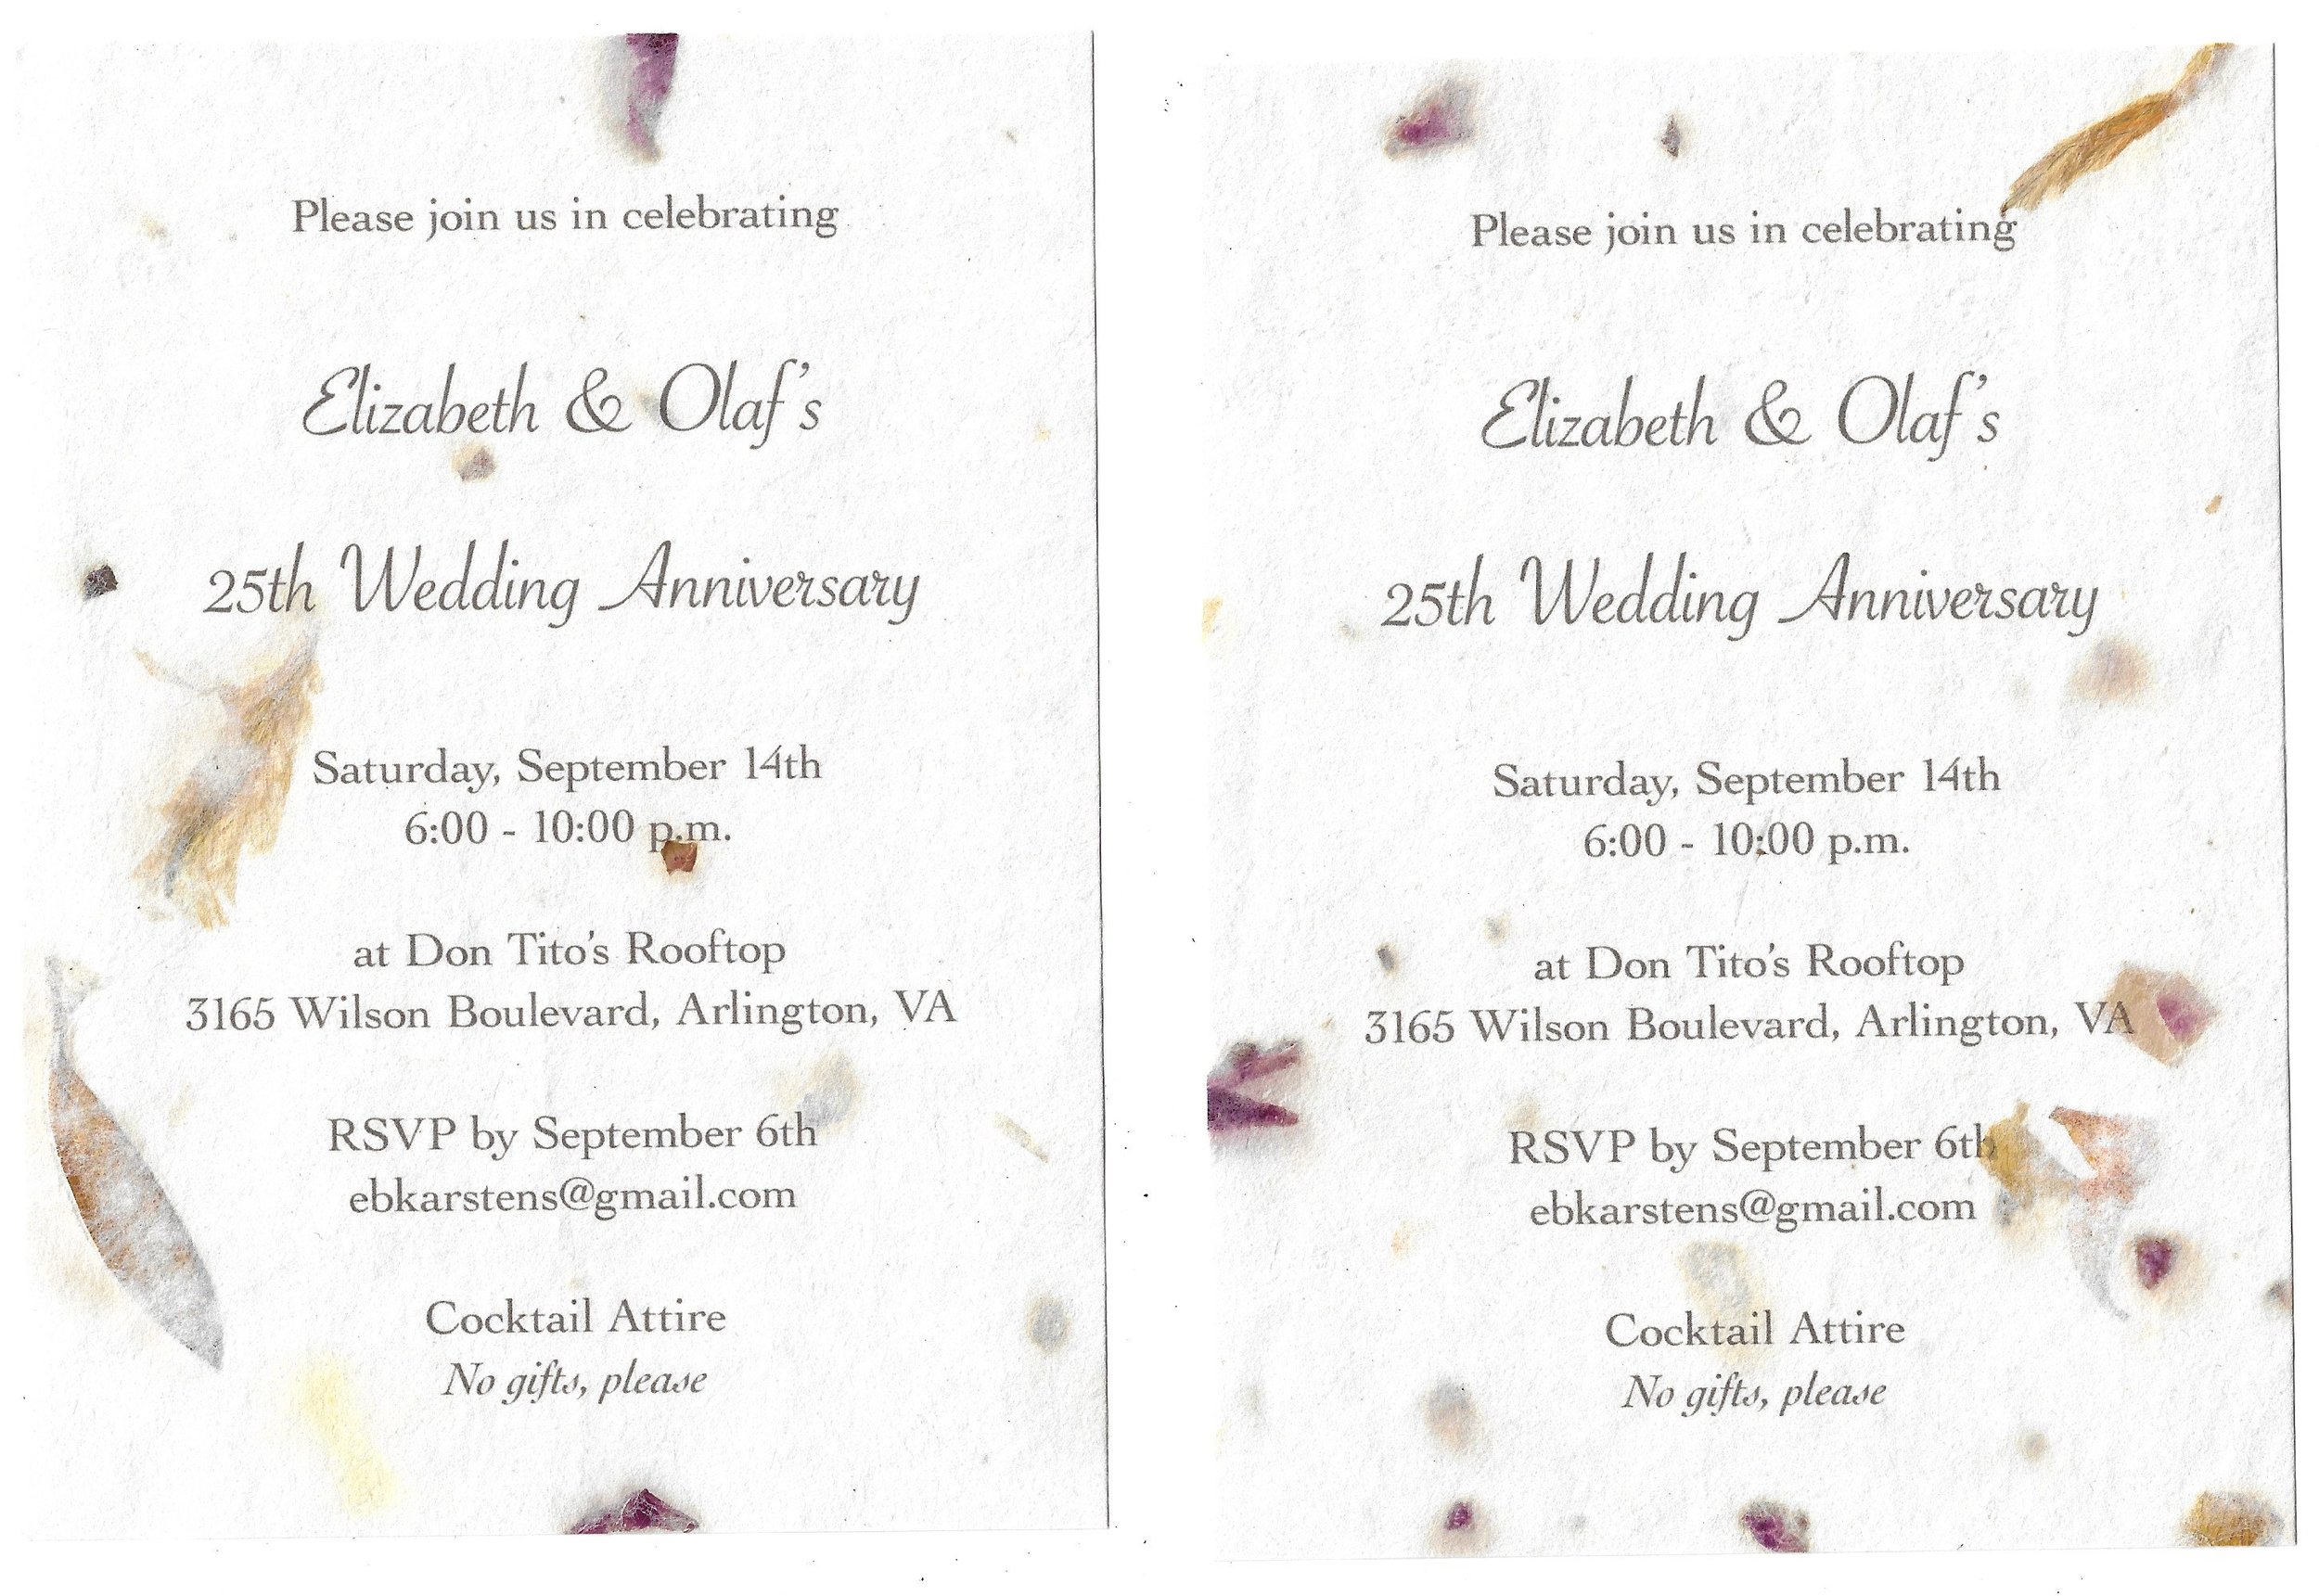 anniversary invitations for Elizabeth & Olaf